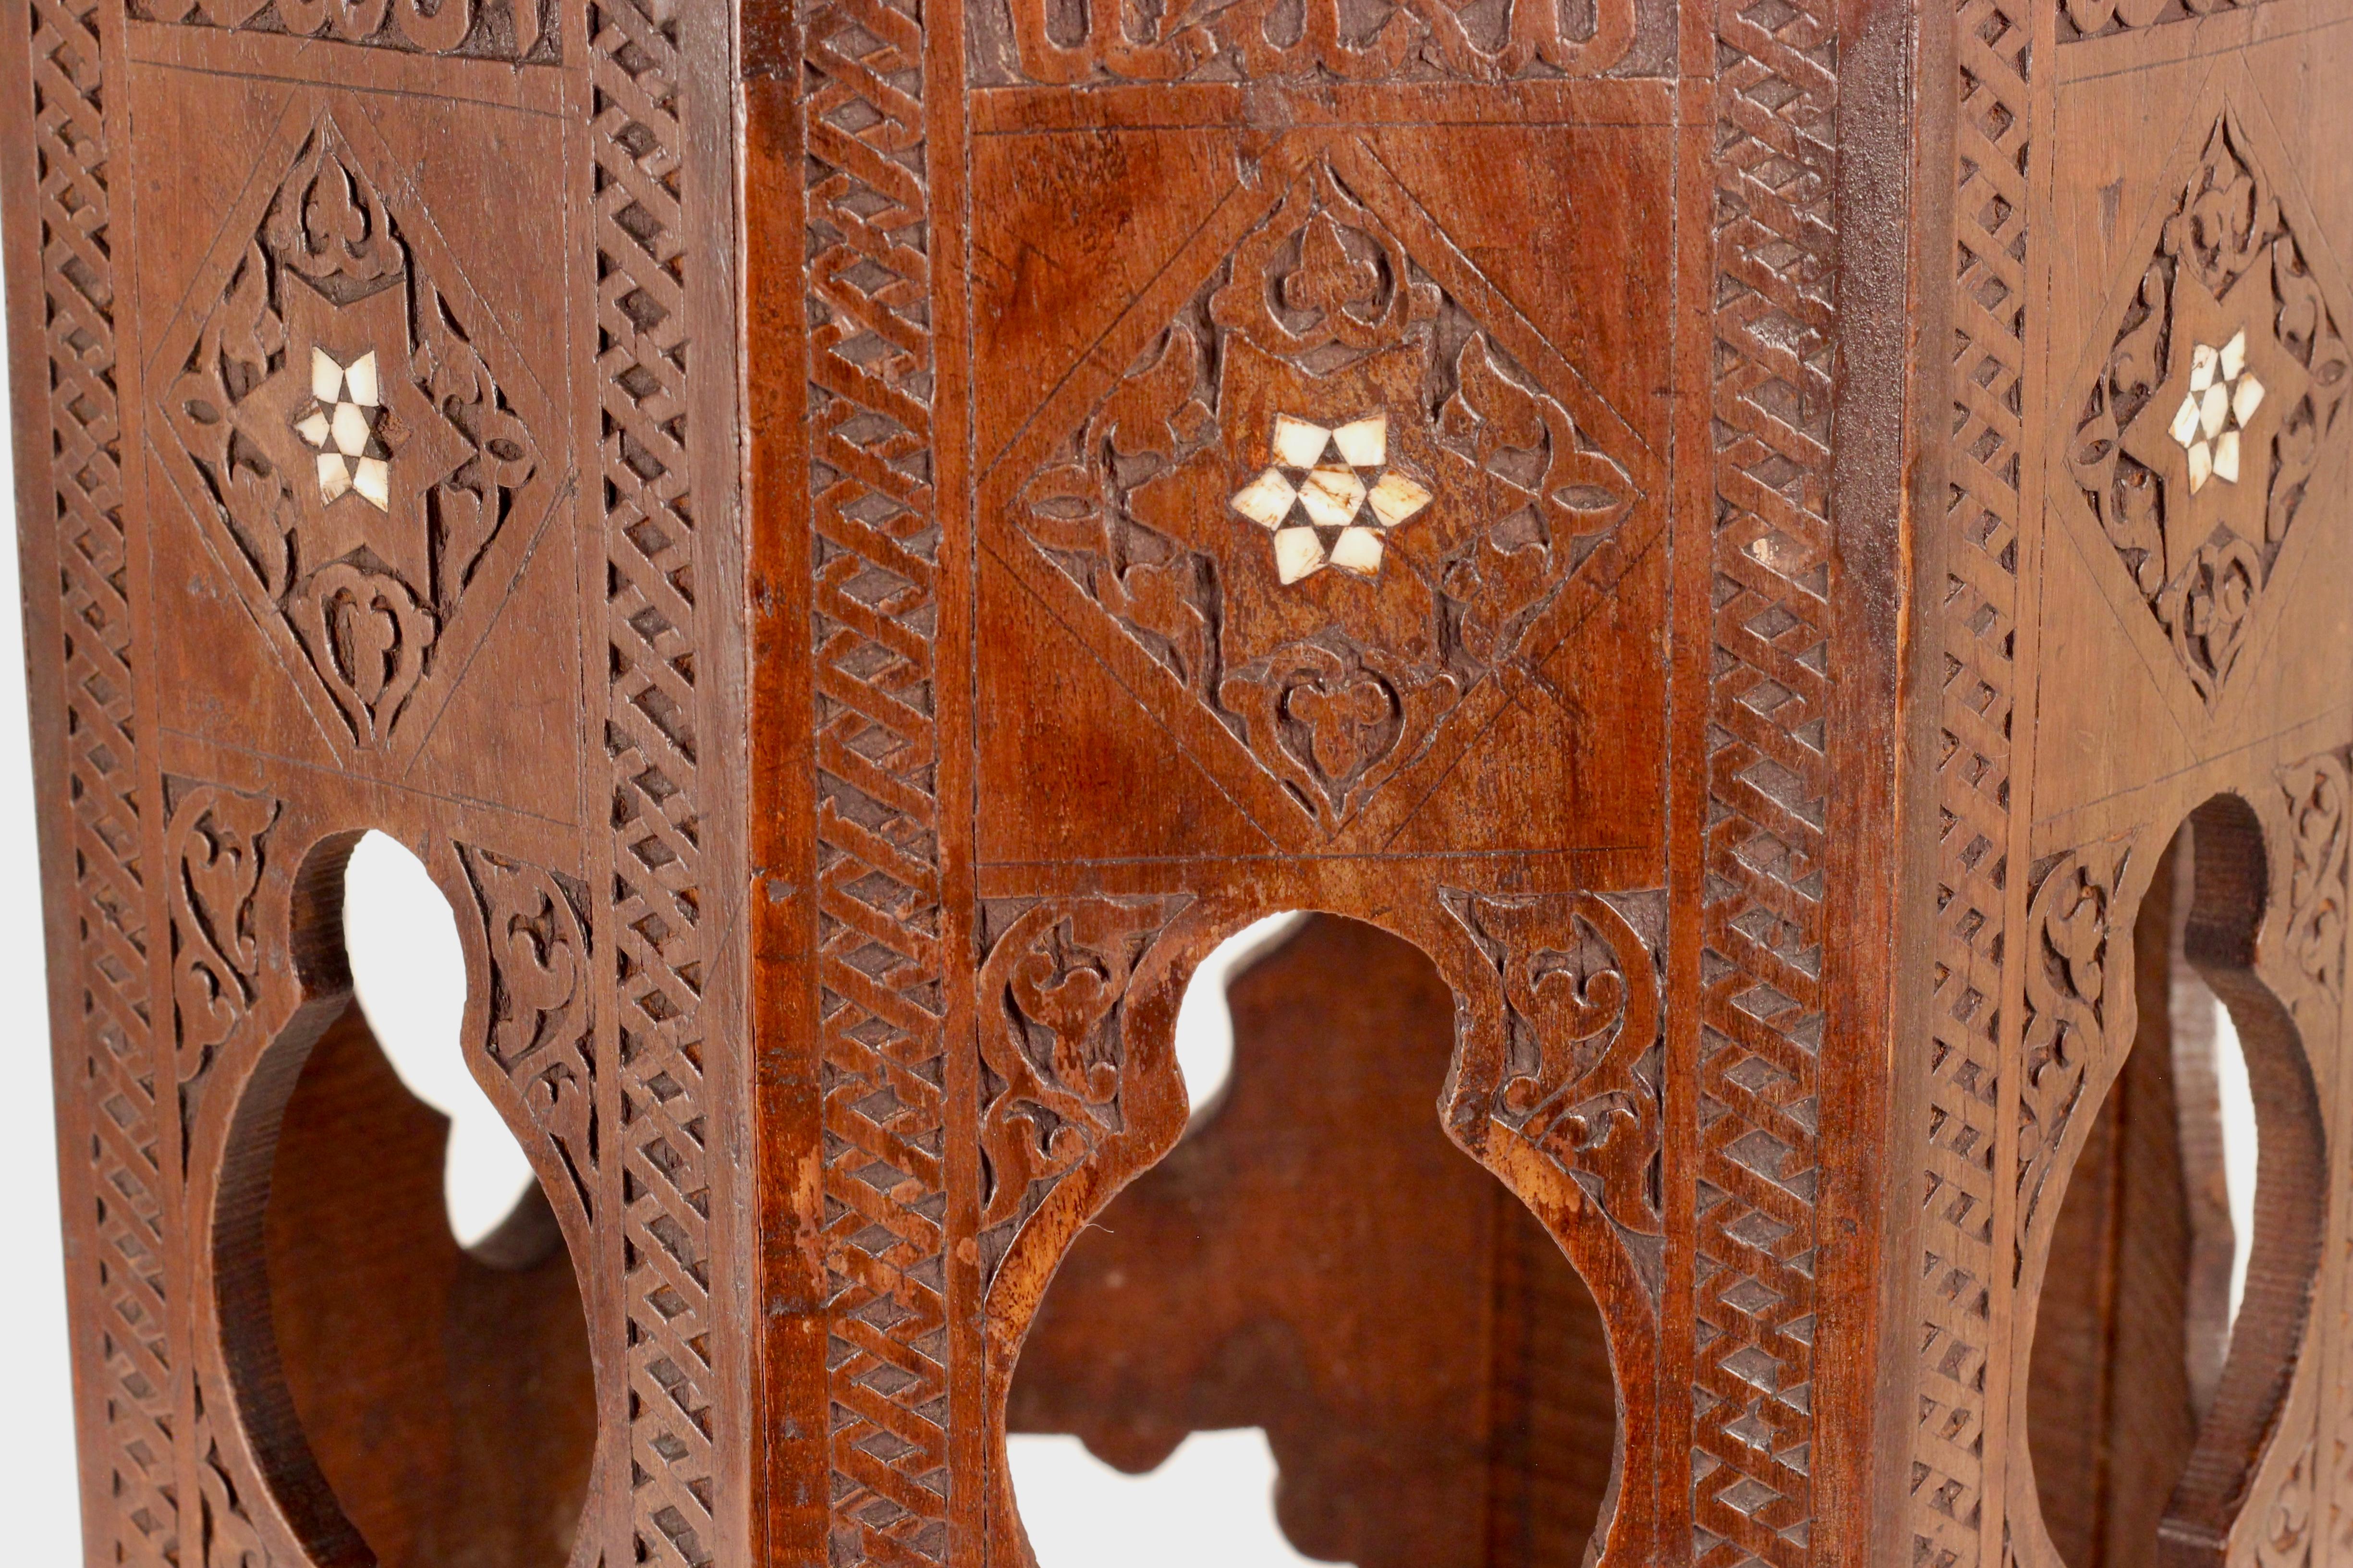 Late 19th Century Boho Chic Style 19th Century Carved Wood and Bone Octagonal Moorish Table